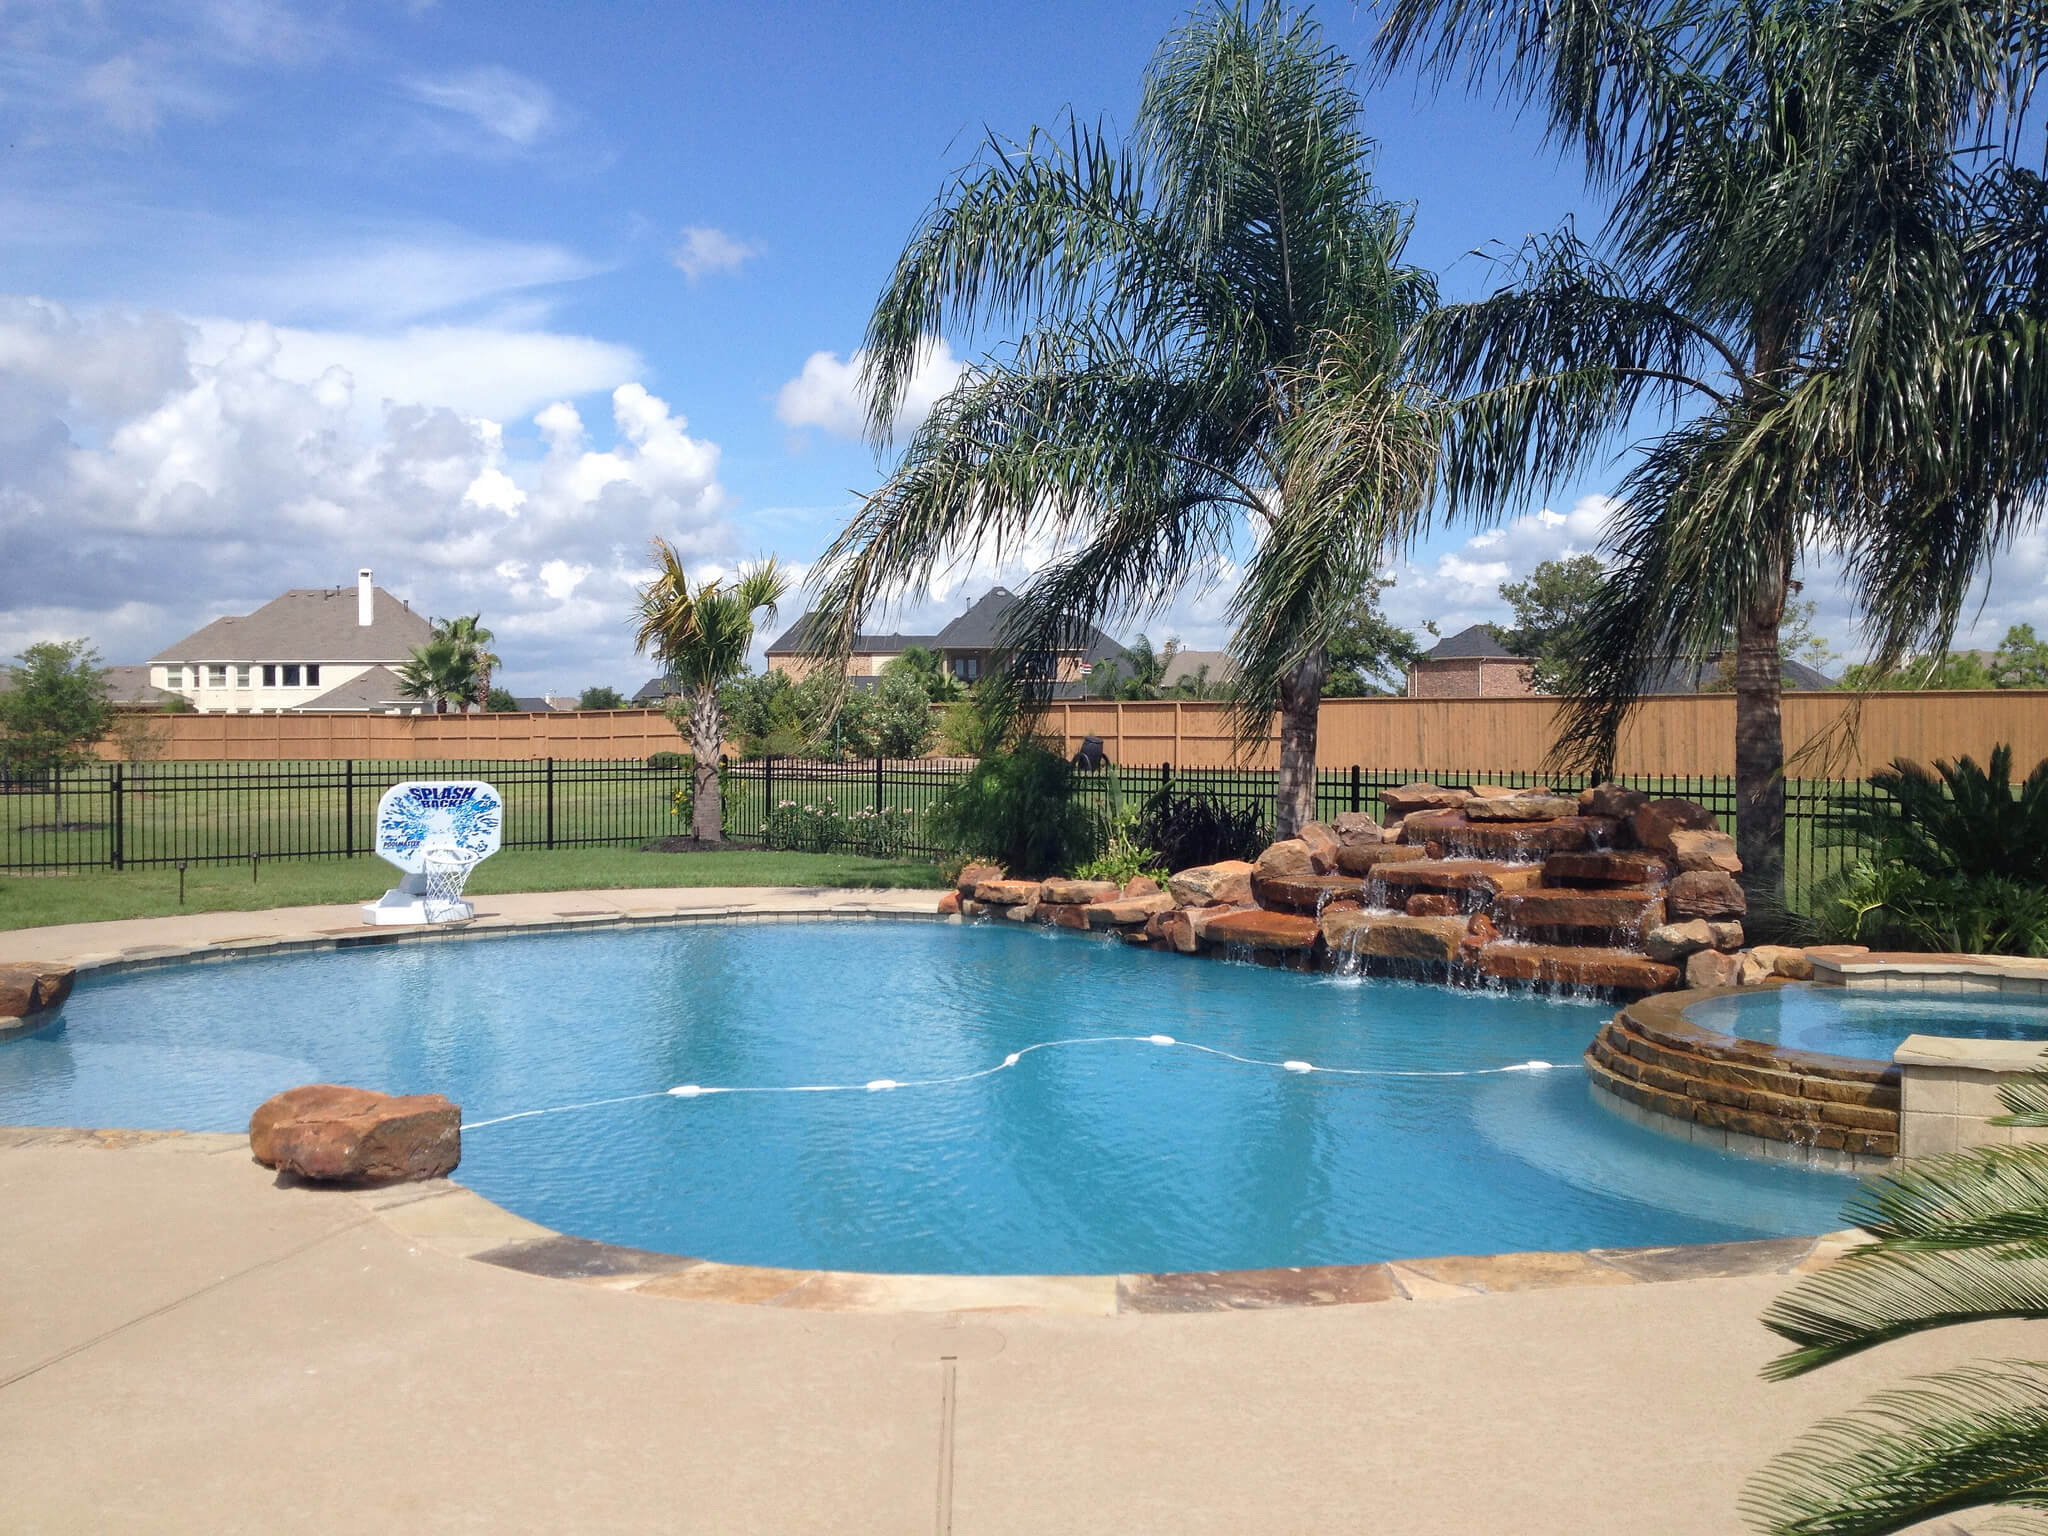 5 Pool Design & Outdoor Living Ideas to Modernize Your Backyard